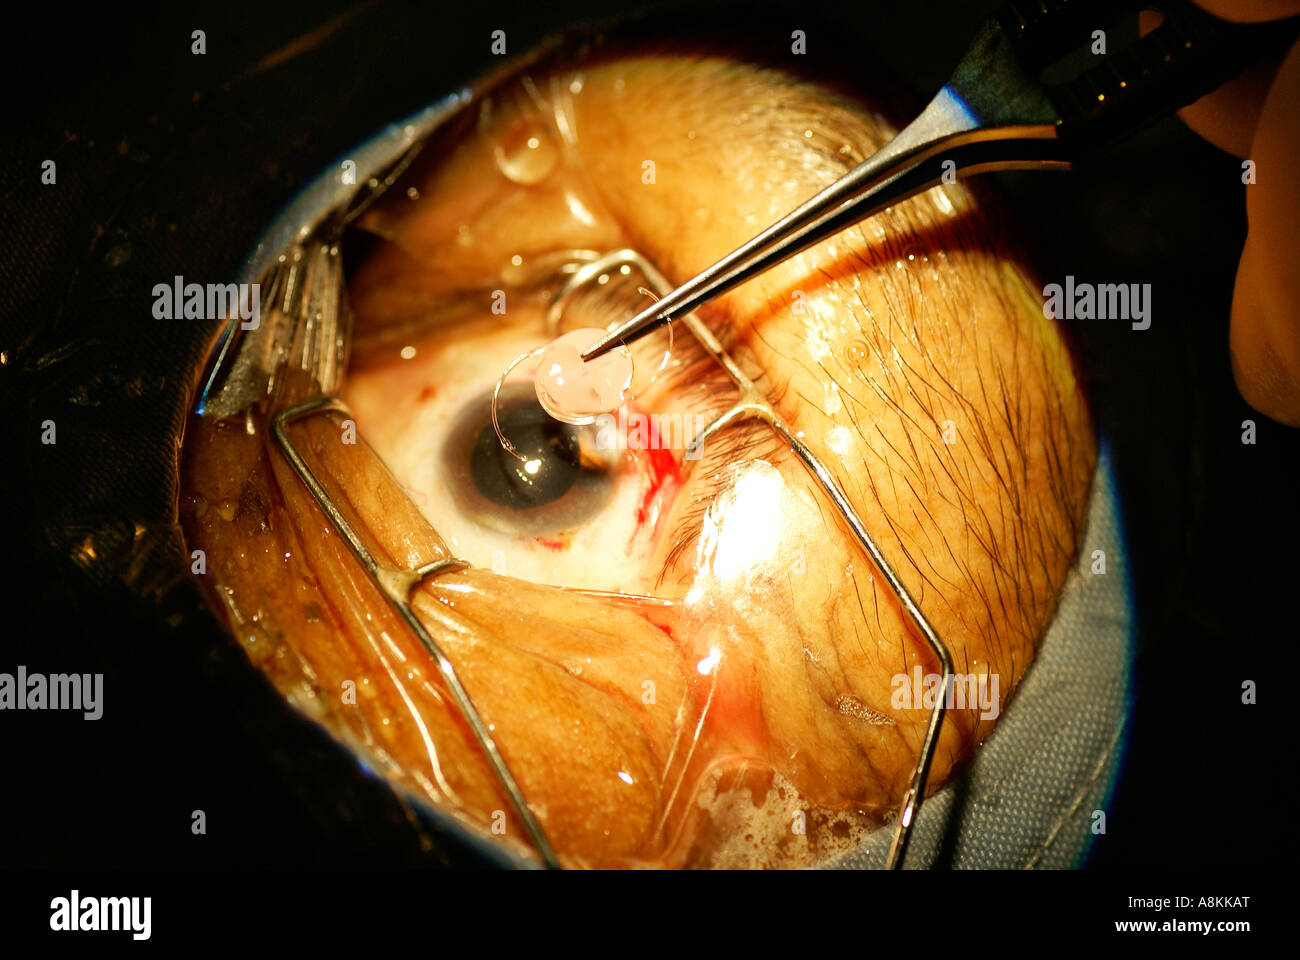 Cataract surgery: Implantation of an artificial intraocular lens Stock Photo